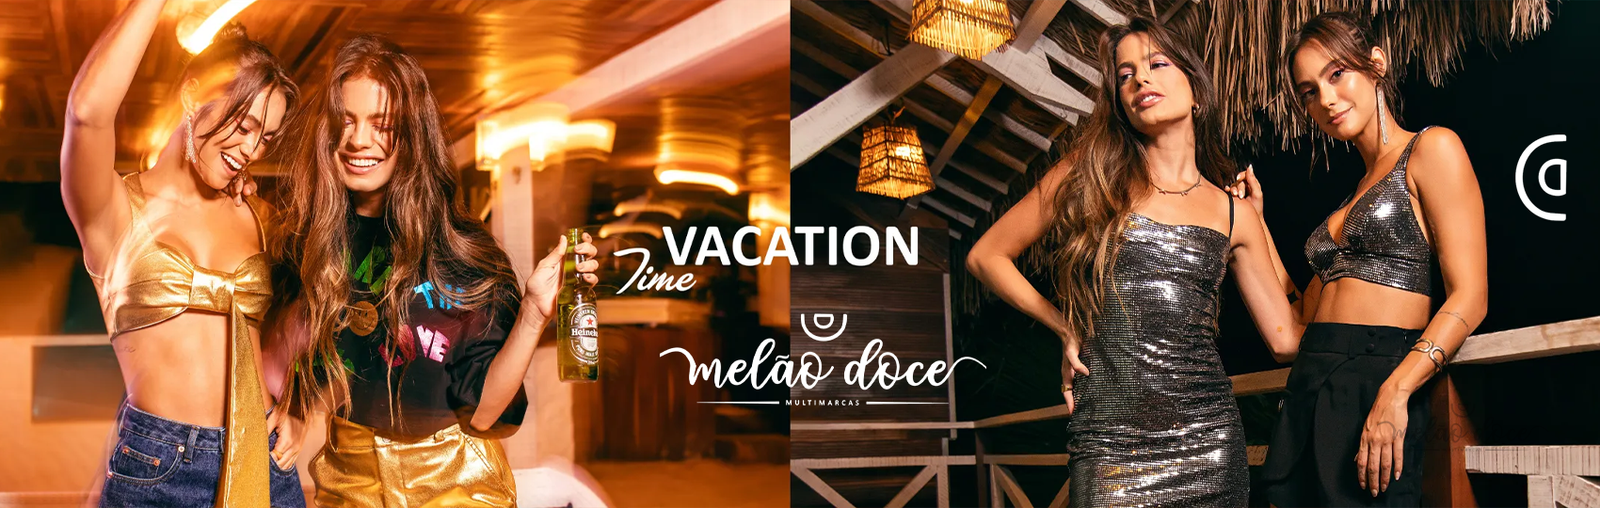 linha vacation melao doce multimarcas itapetinga bahia - loja de roupa e acessorios